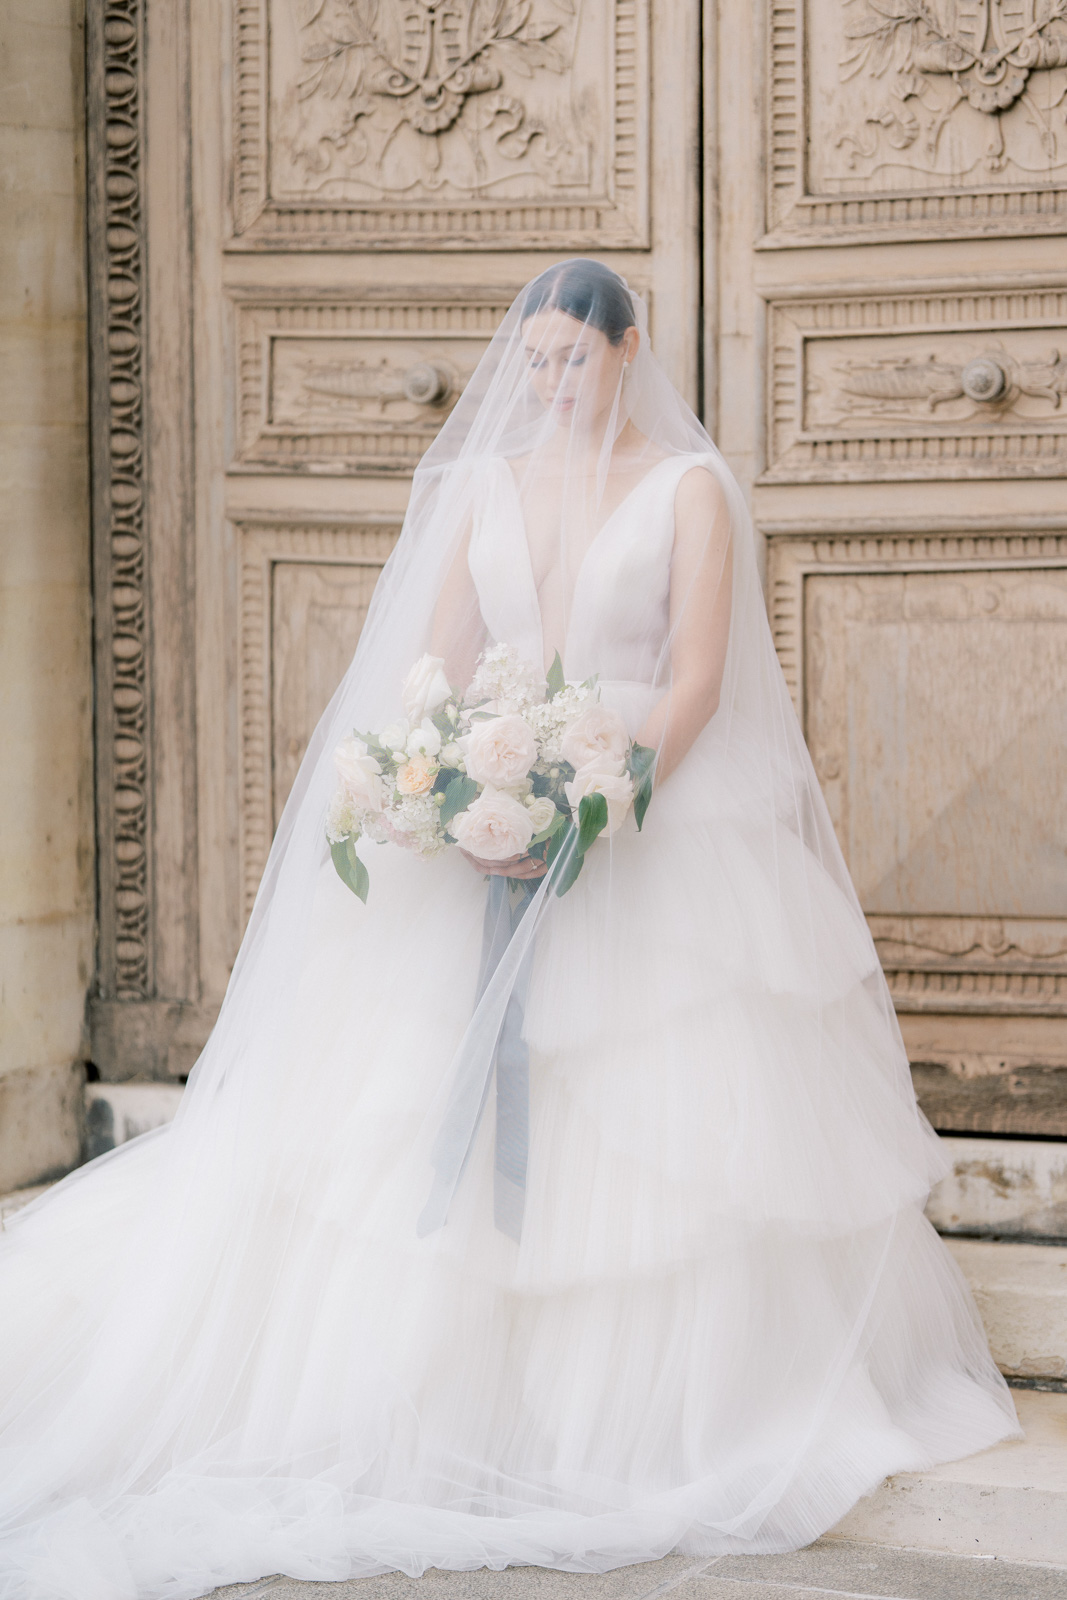 The Louvre Paris Wedding Photographers | Chernogorov Photography Destination Wedding Photographers